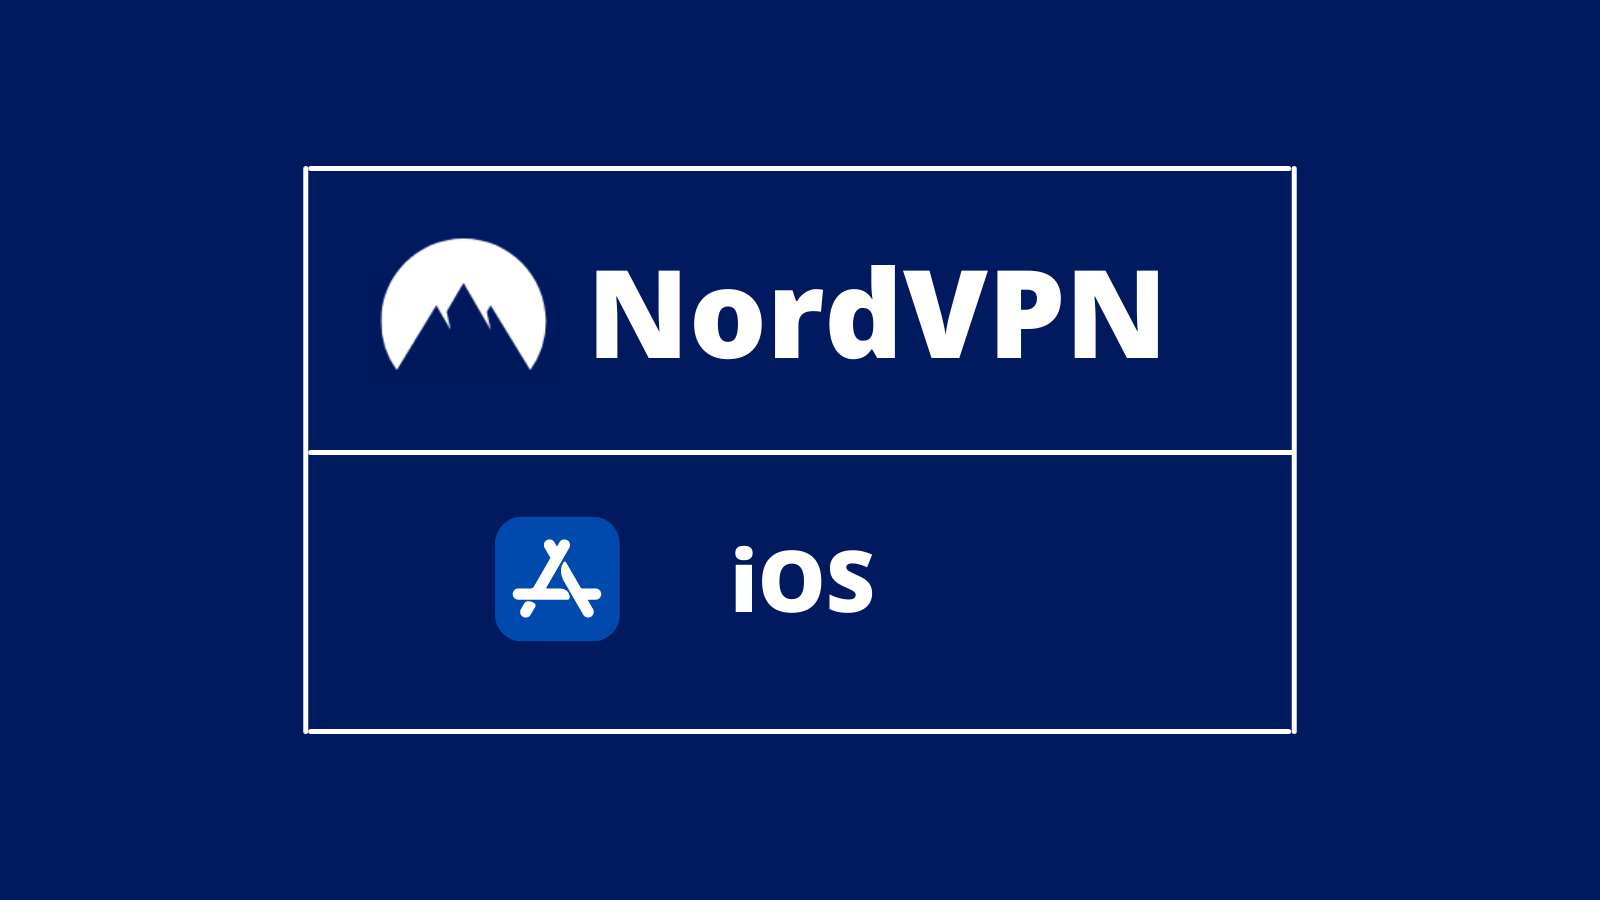 download nordvpn for iphone